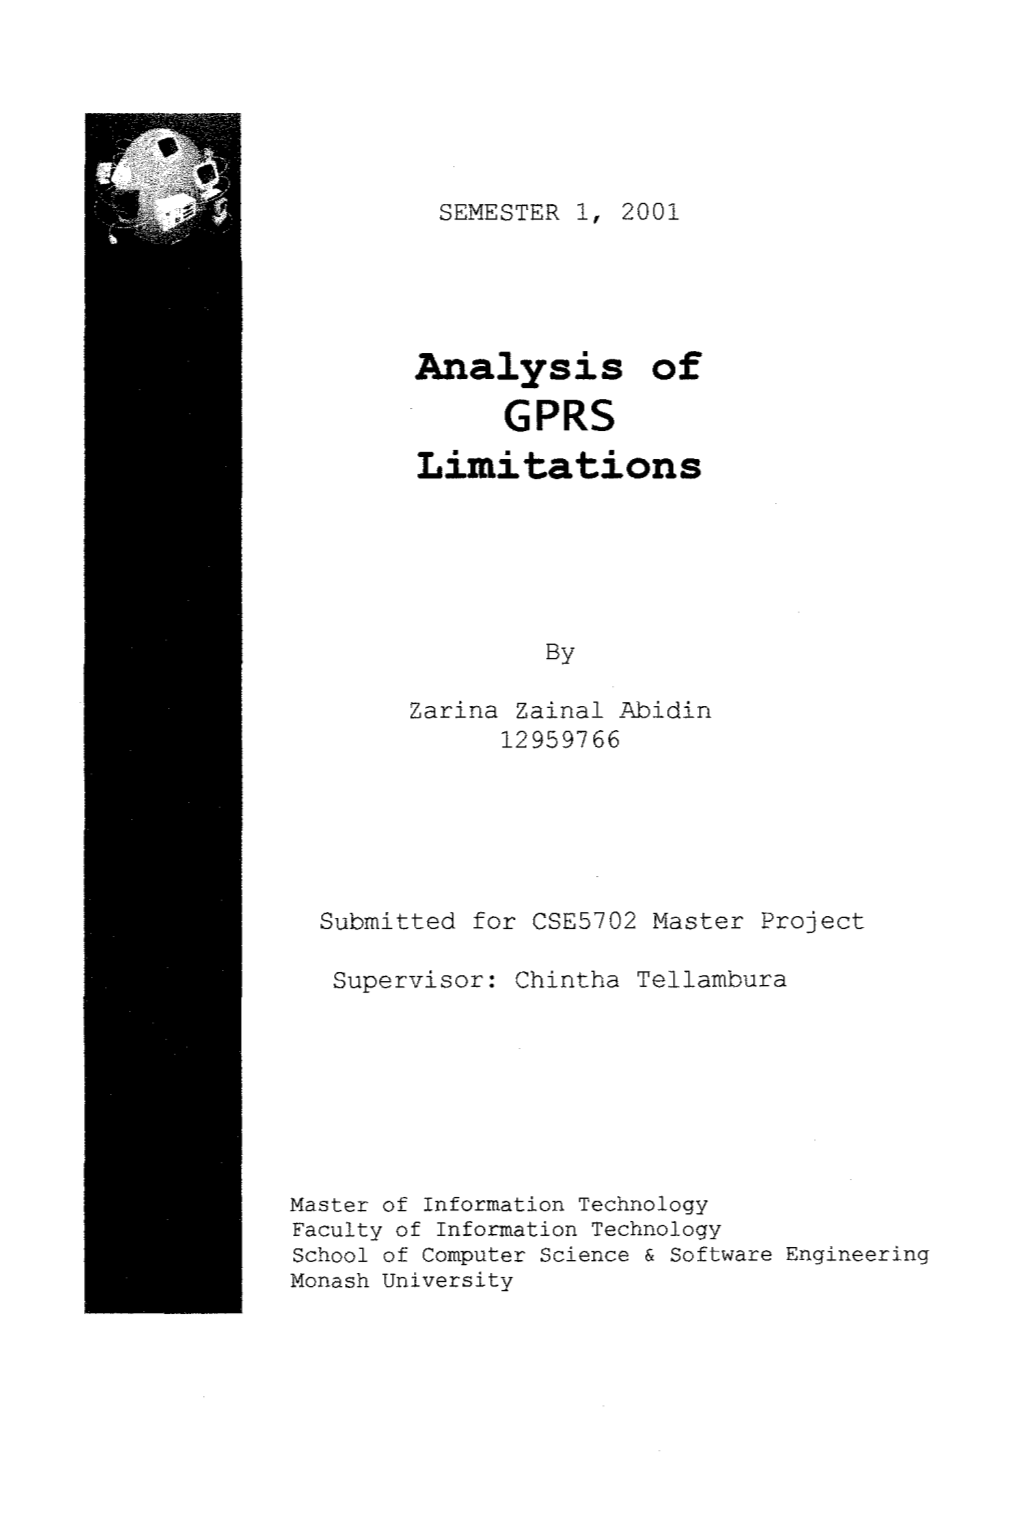 Analysis of GPRS Limitations